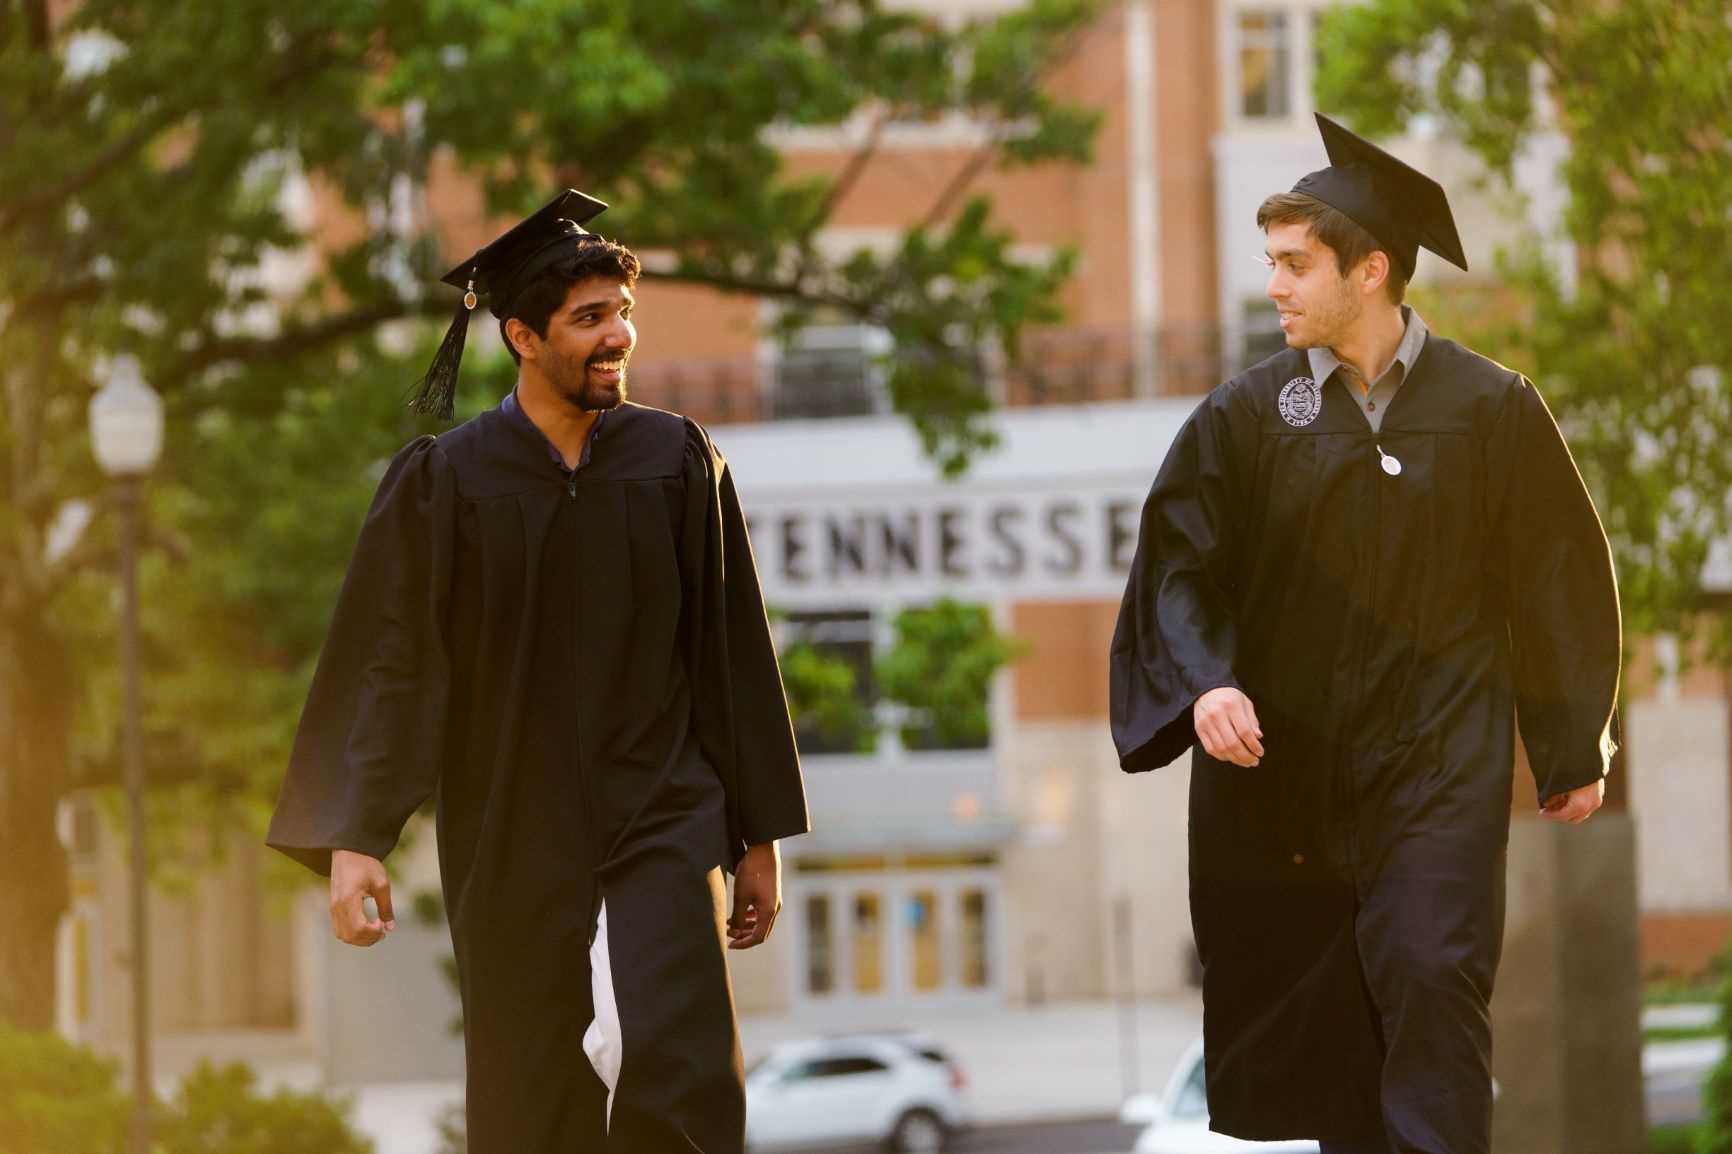 Graduates walking on campus